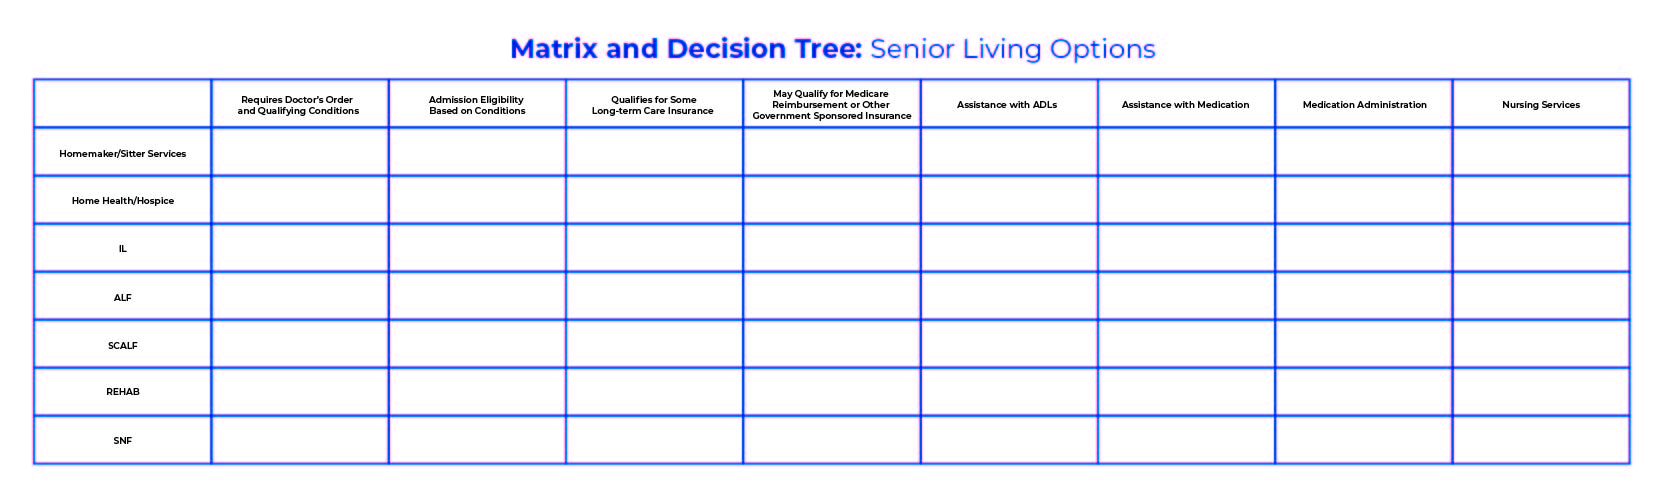 decision tree for senior living options